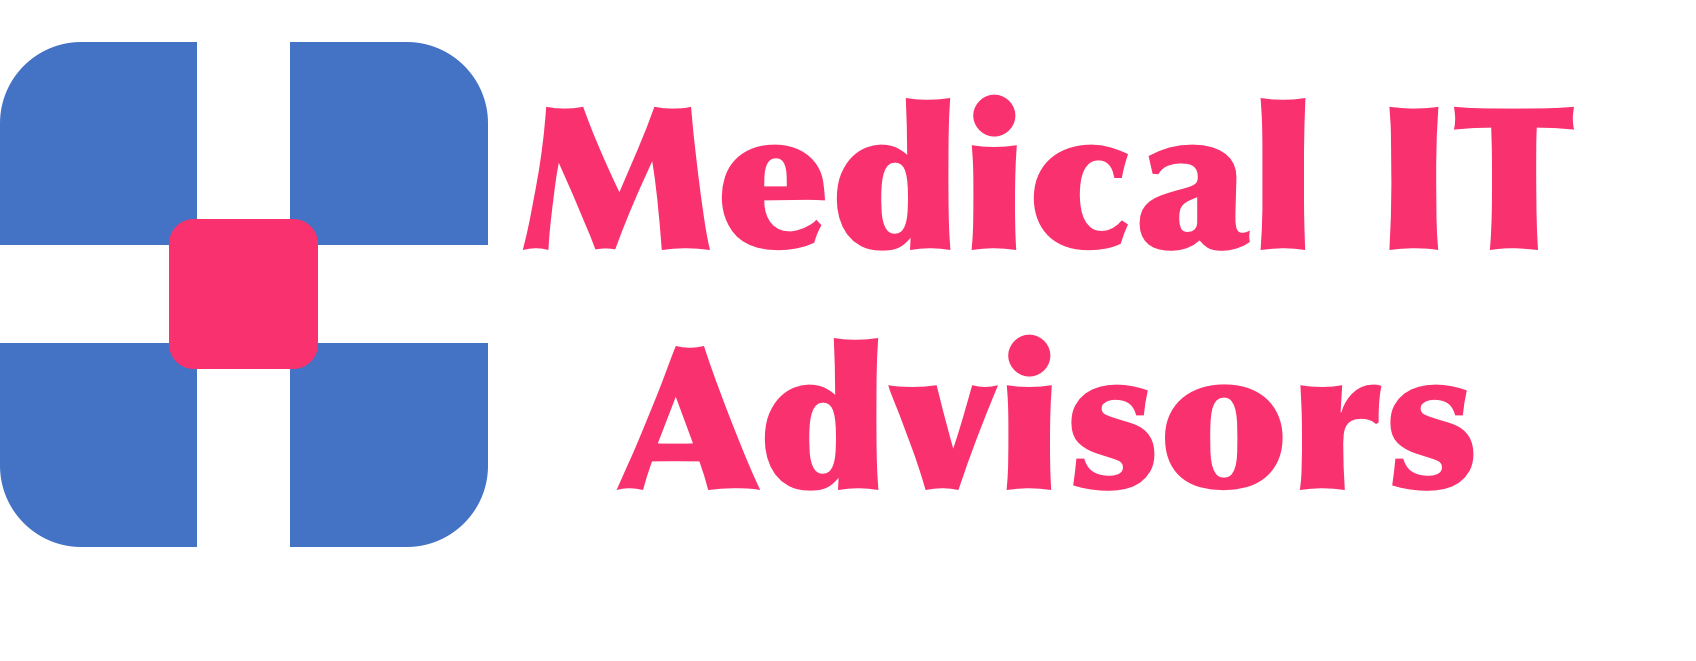 Medical IT Advisors logo